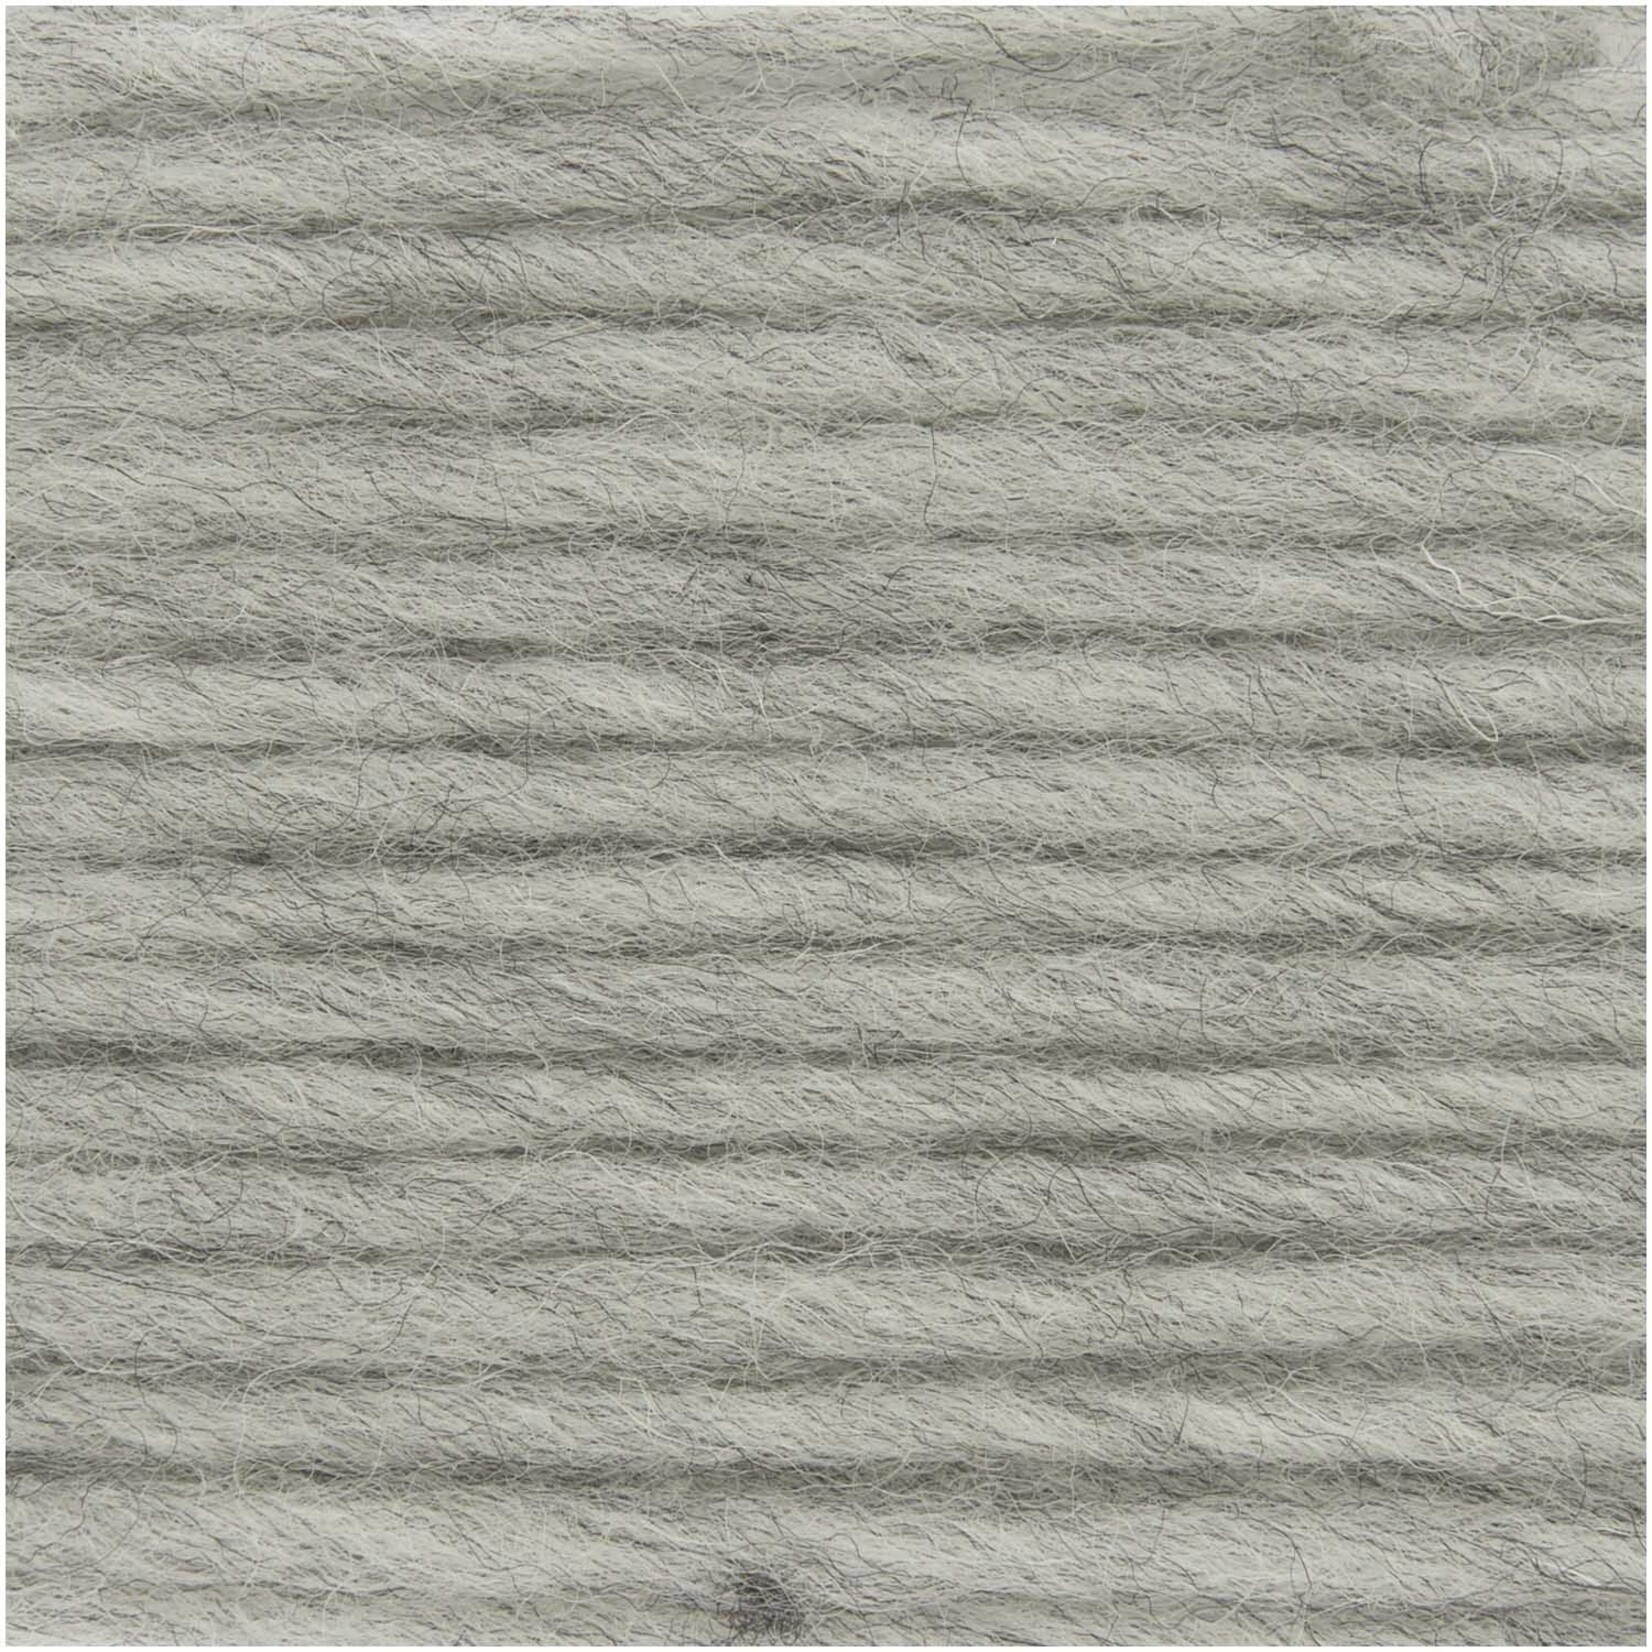 Rico Organic Wool Aran 4 Grey